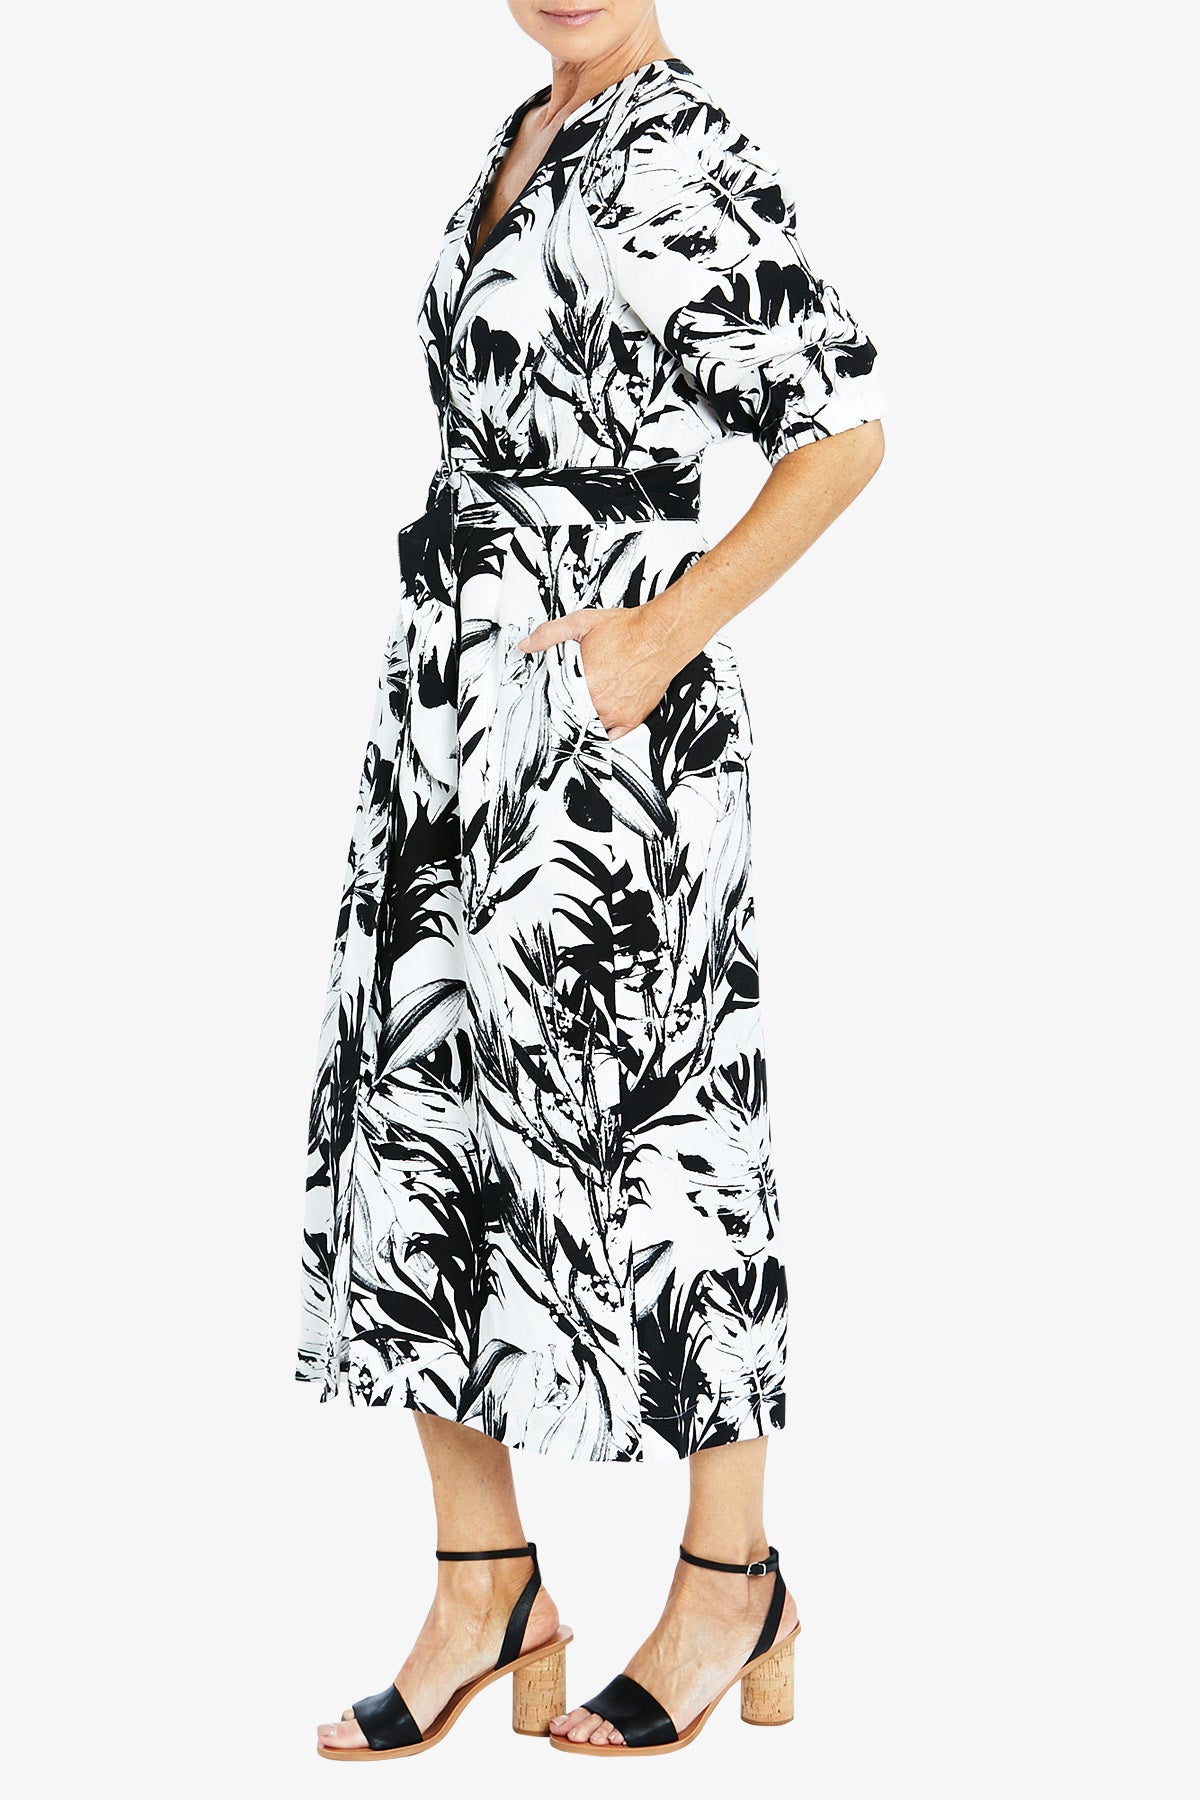 Short Sleeve Belted Tahiti Print Dress White and Black